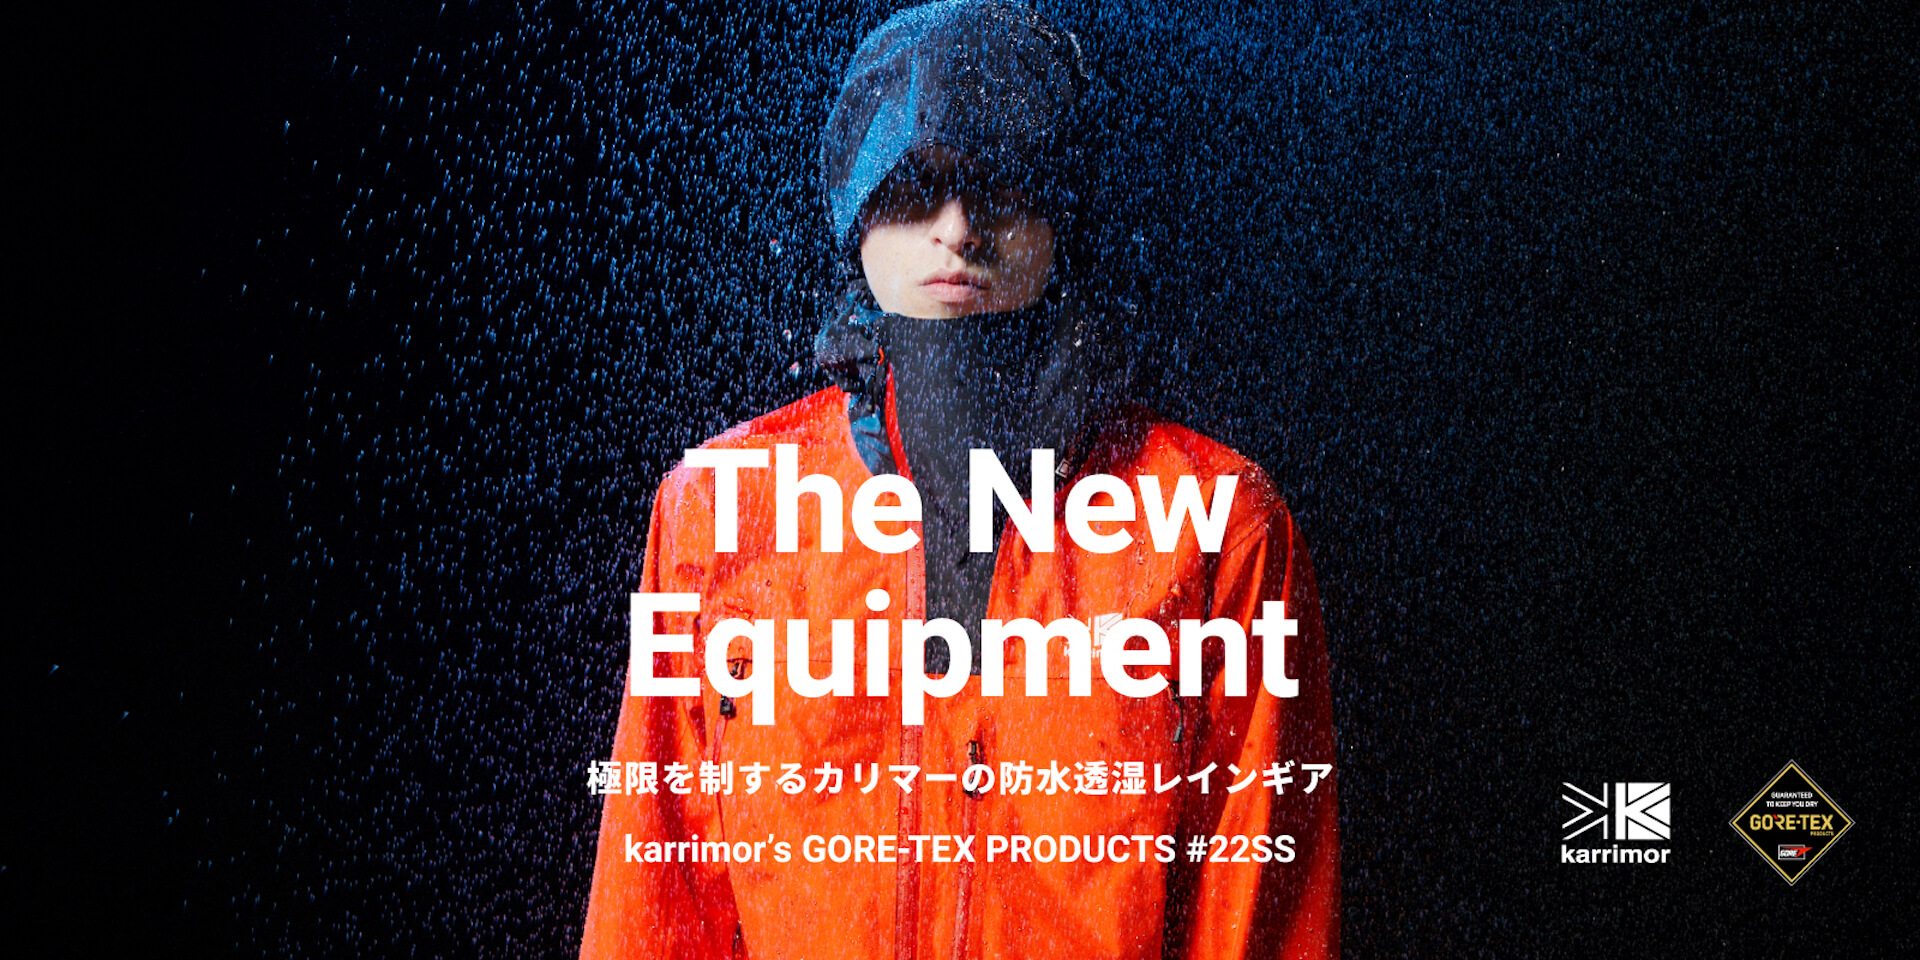 karrimorからGORE-TEX Fabrics採用のレインギアが登場！セットアップ、レインジャケット、パンツがラインナップ fashion220121_karrimor-01